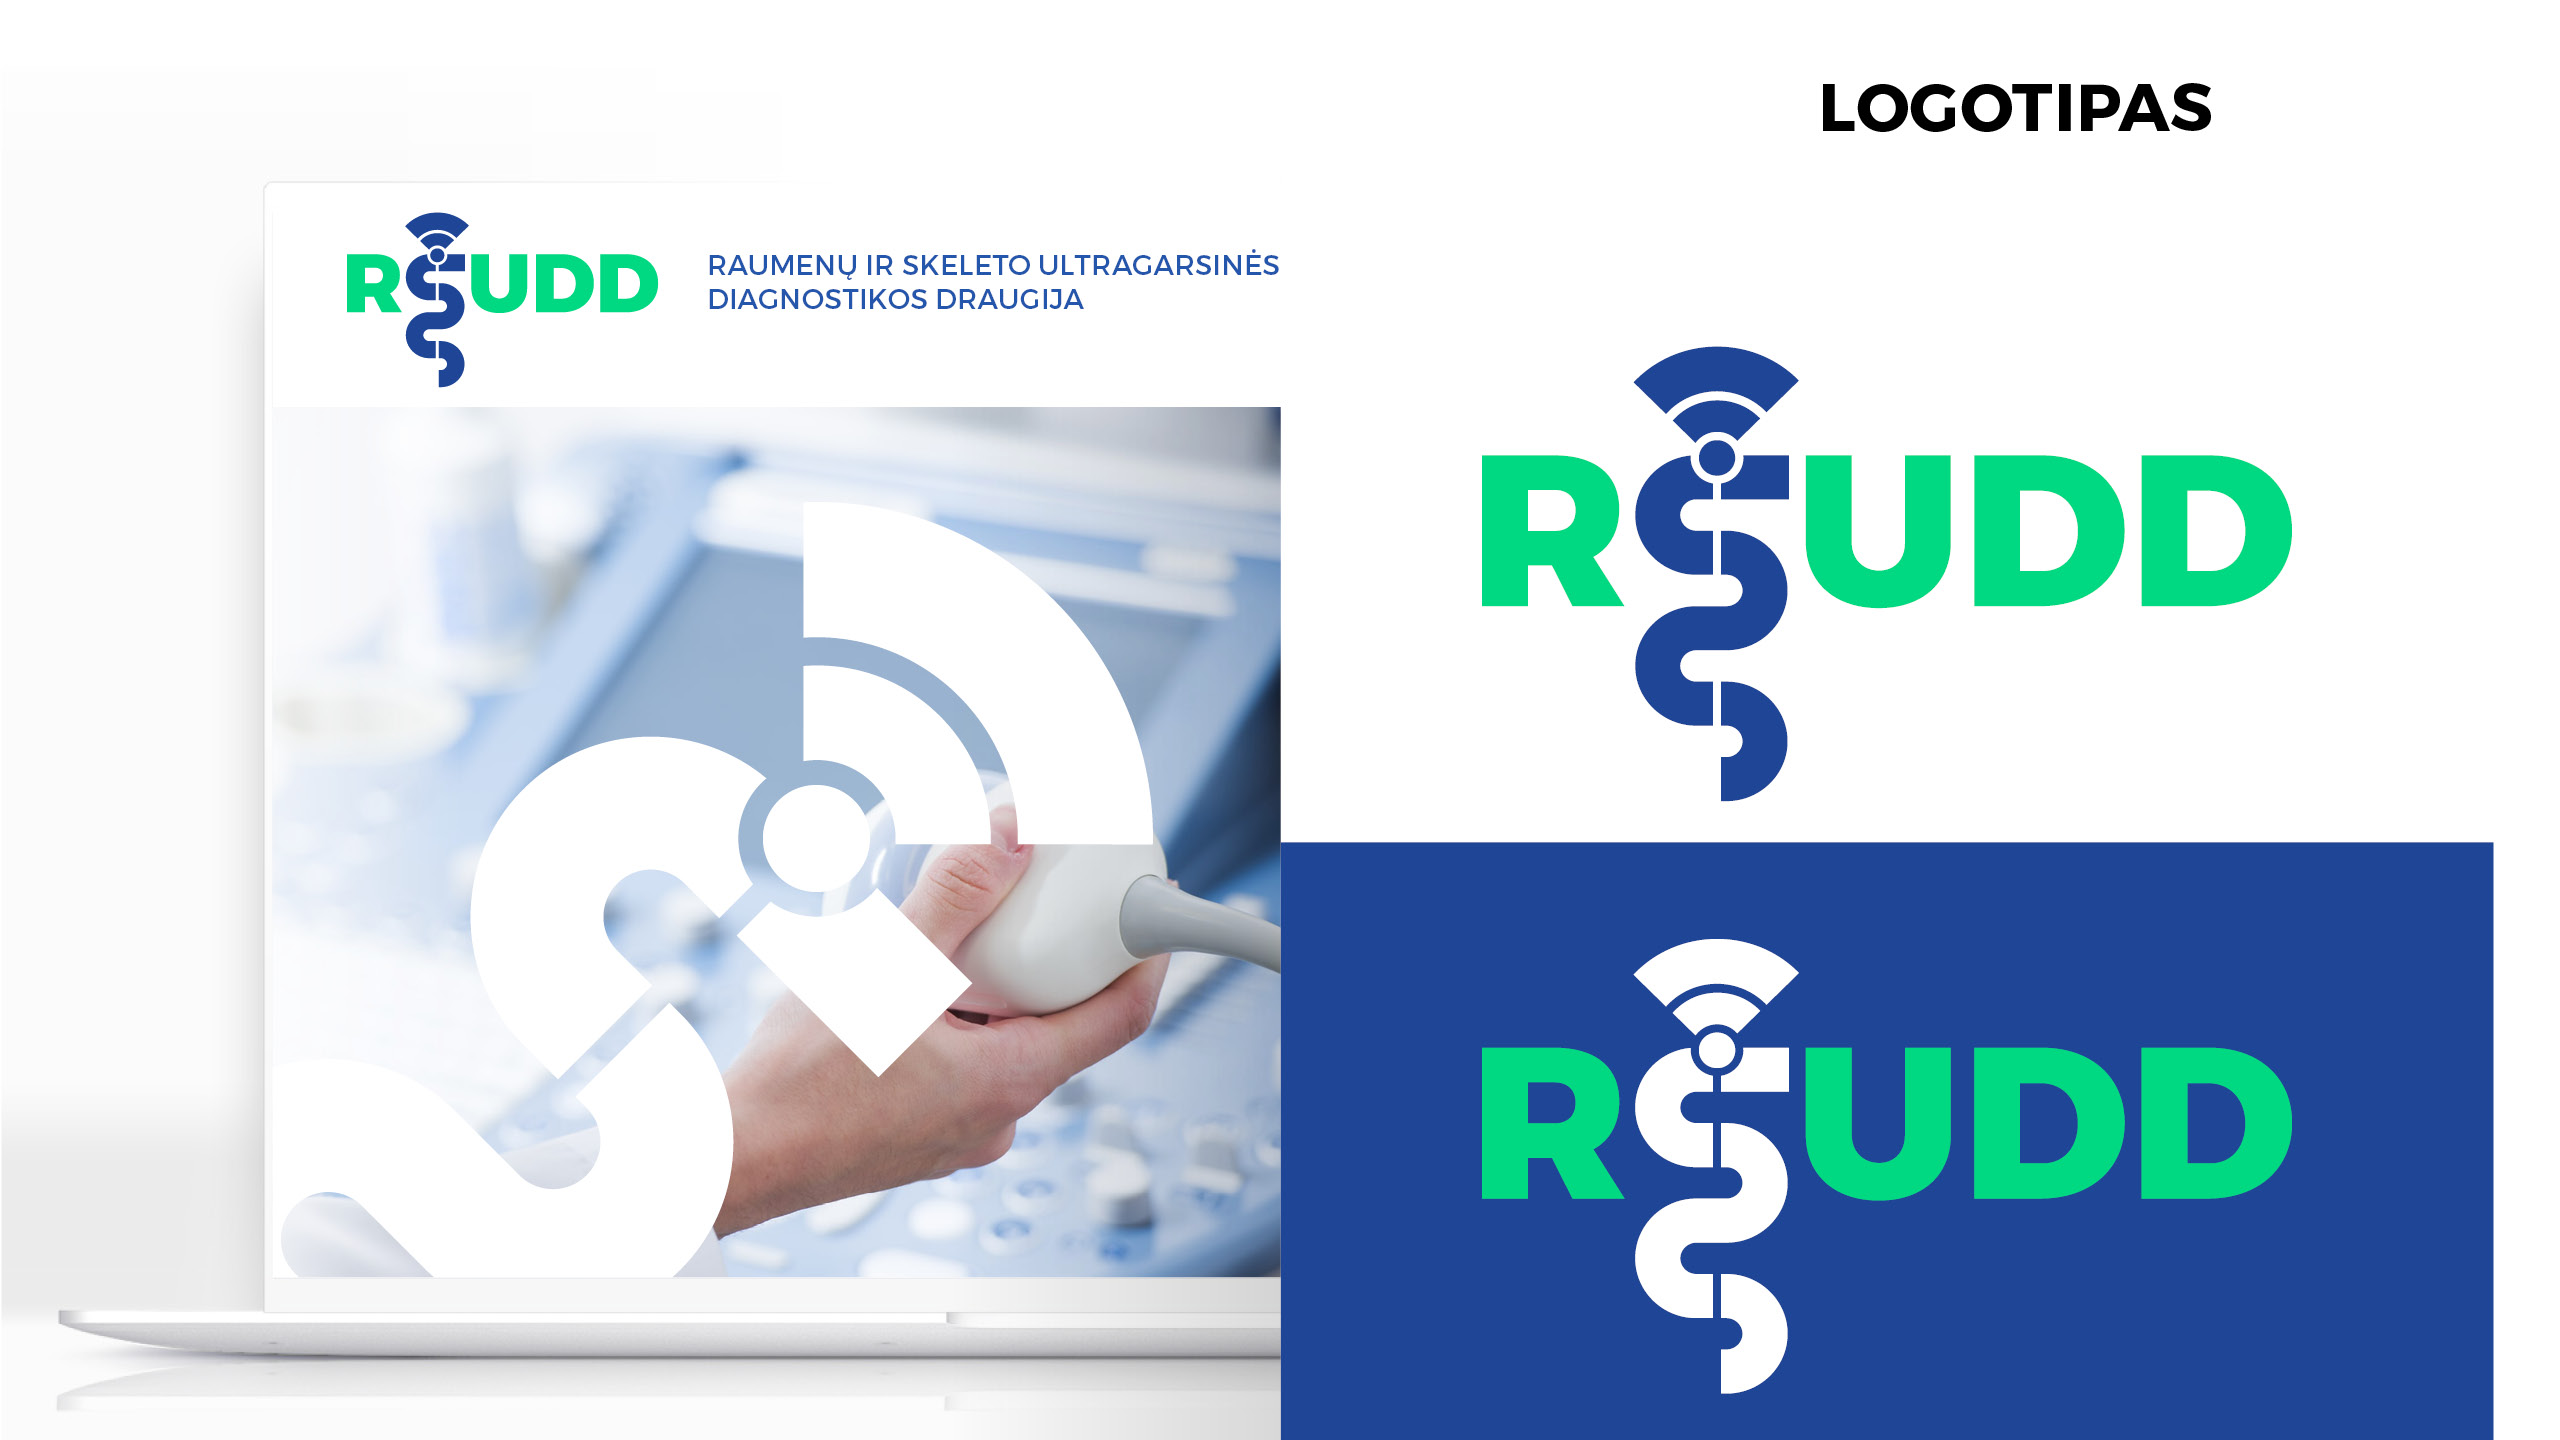 RSUDD Brandbook - Logobou Design 2